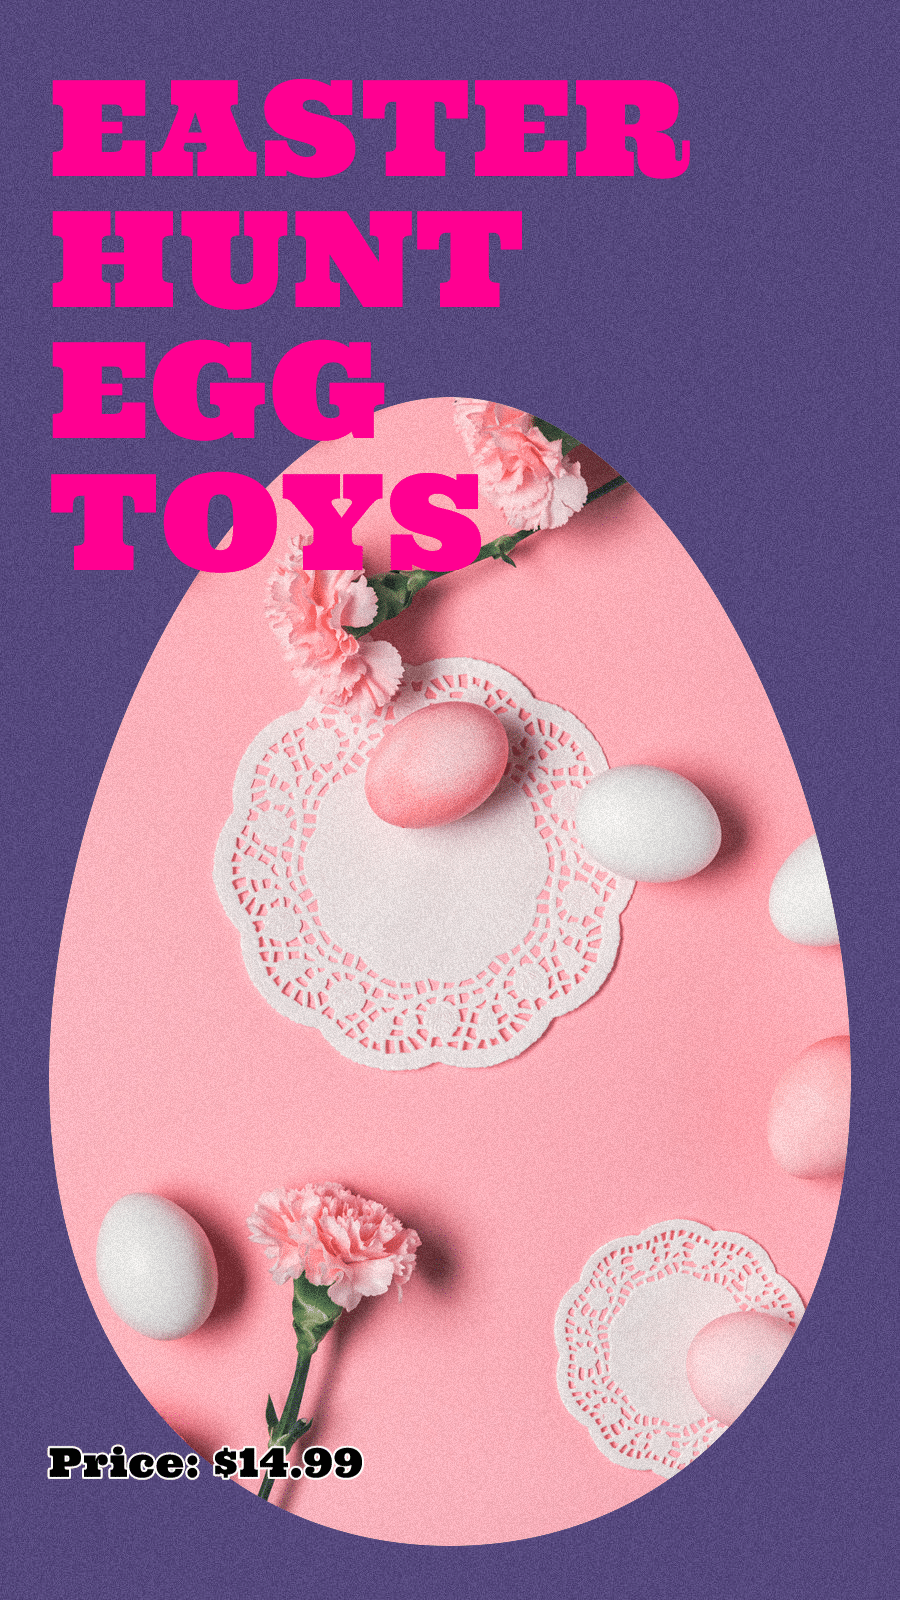 Simple Eaaster Hunt Egg Toys Dipslay Instagram Story预览效果